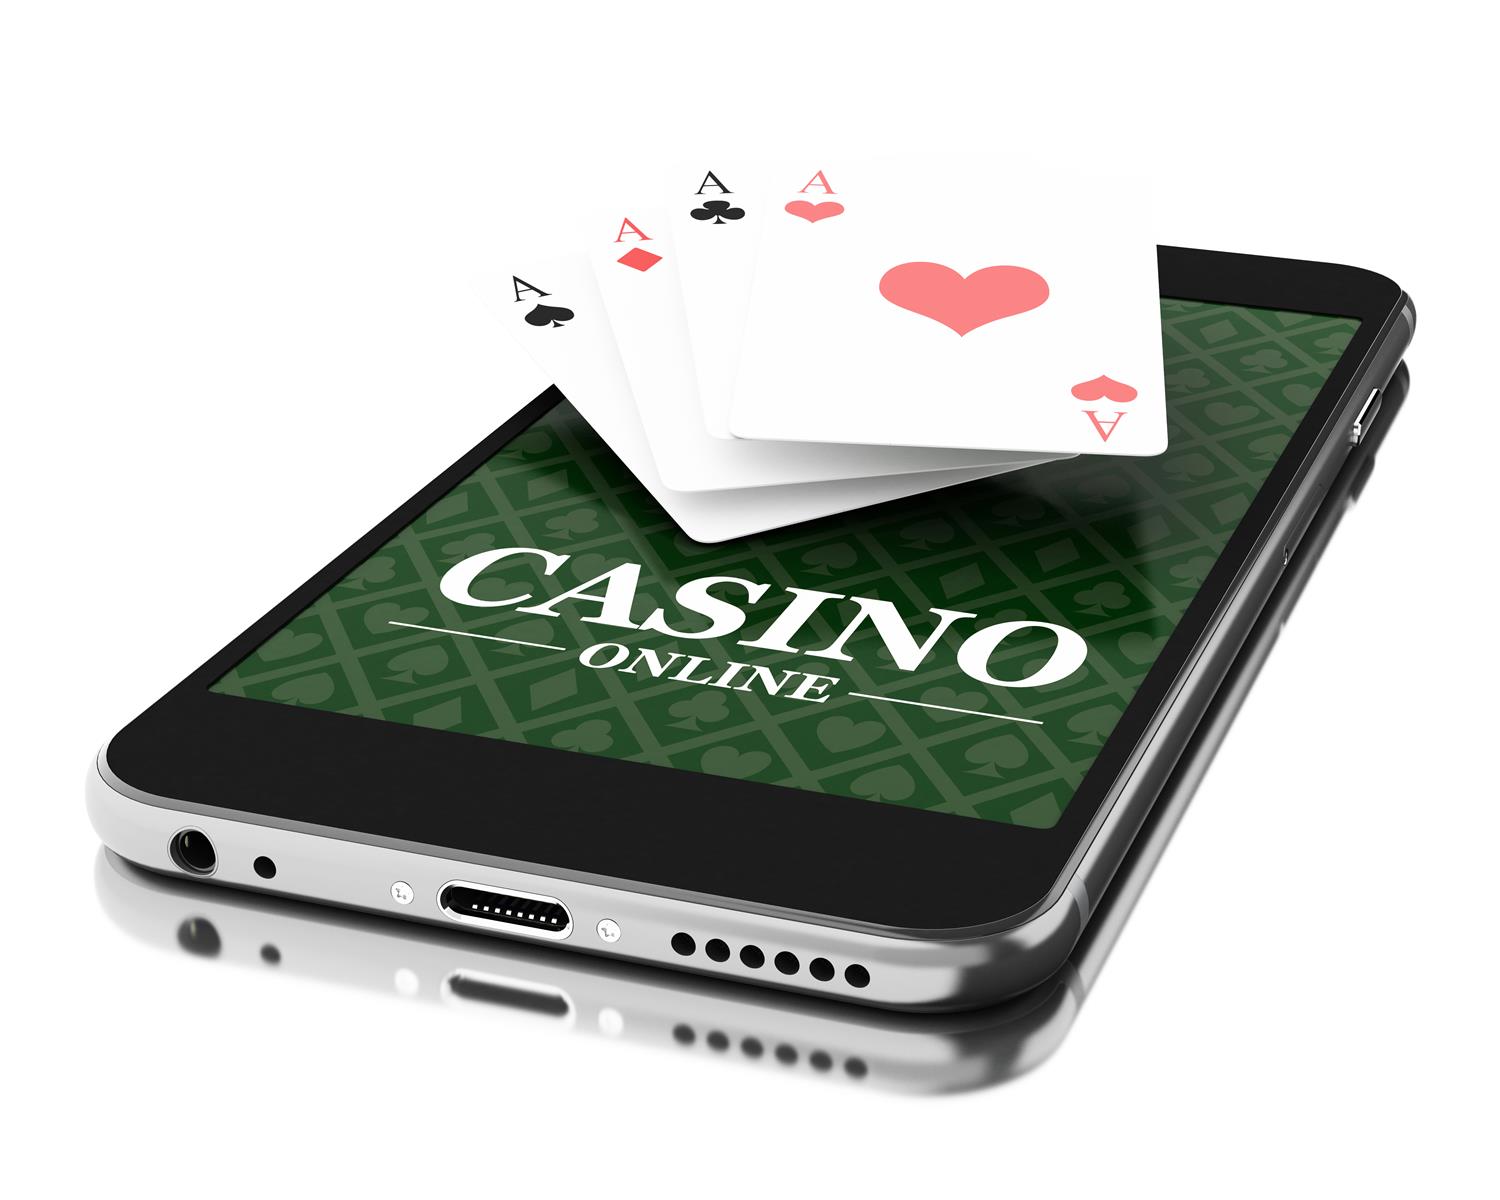 Mobil - Casino